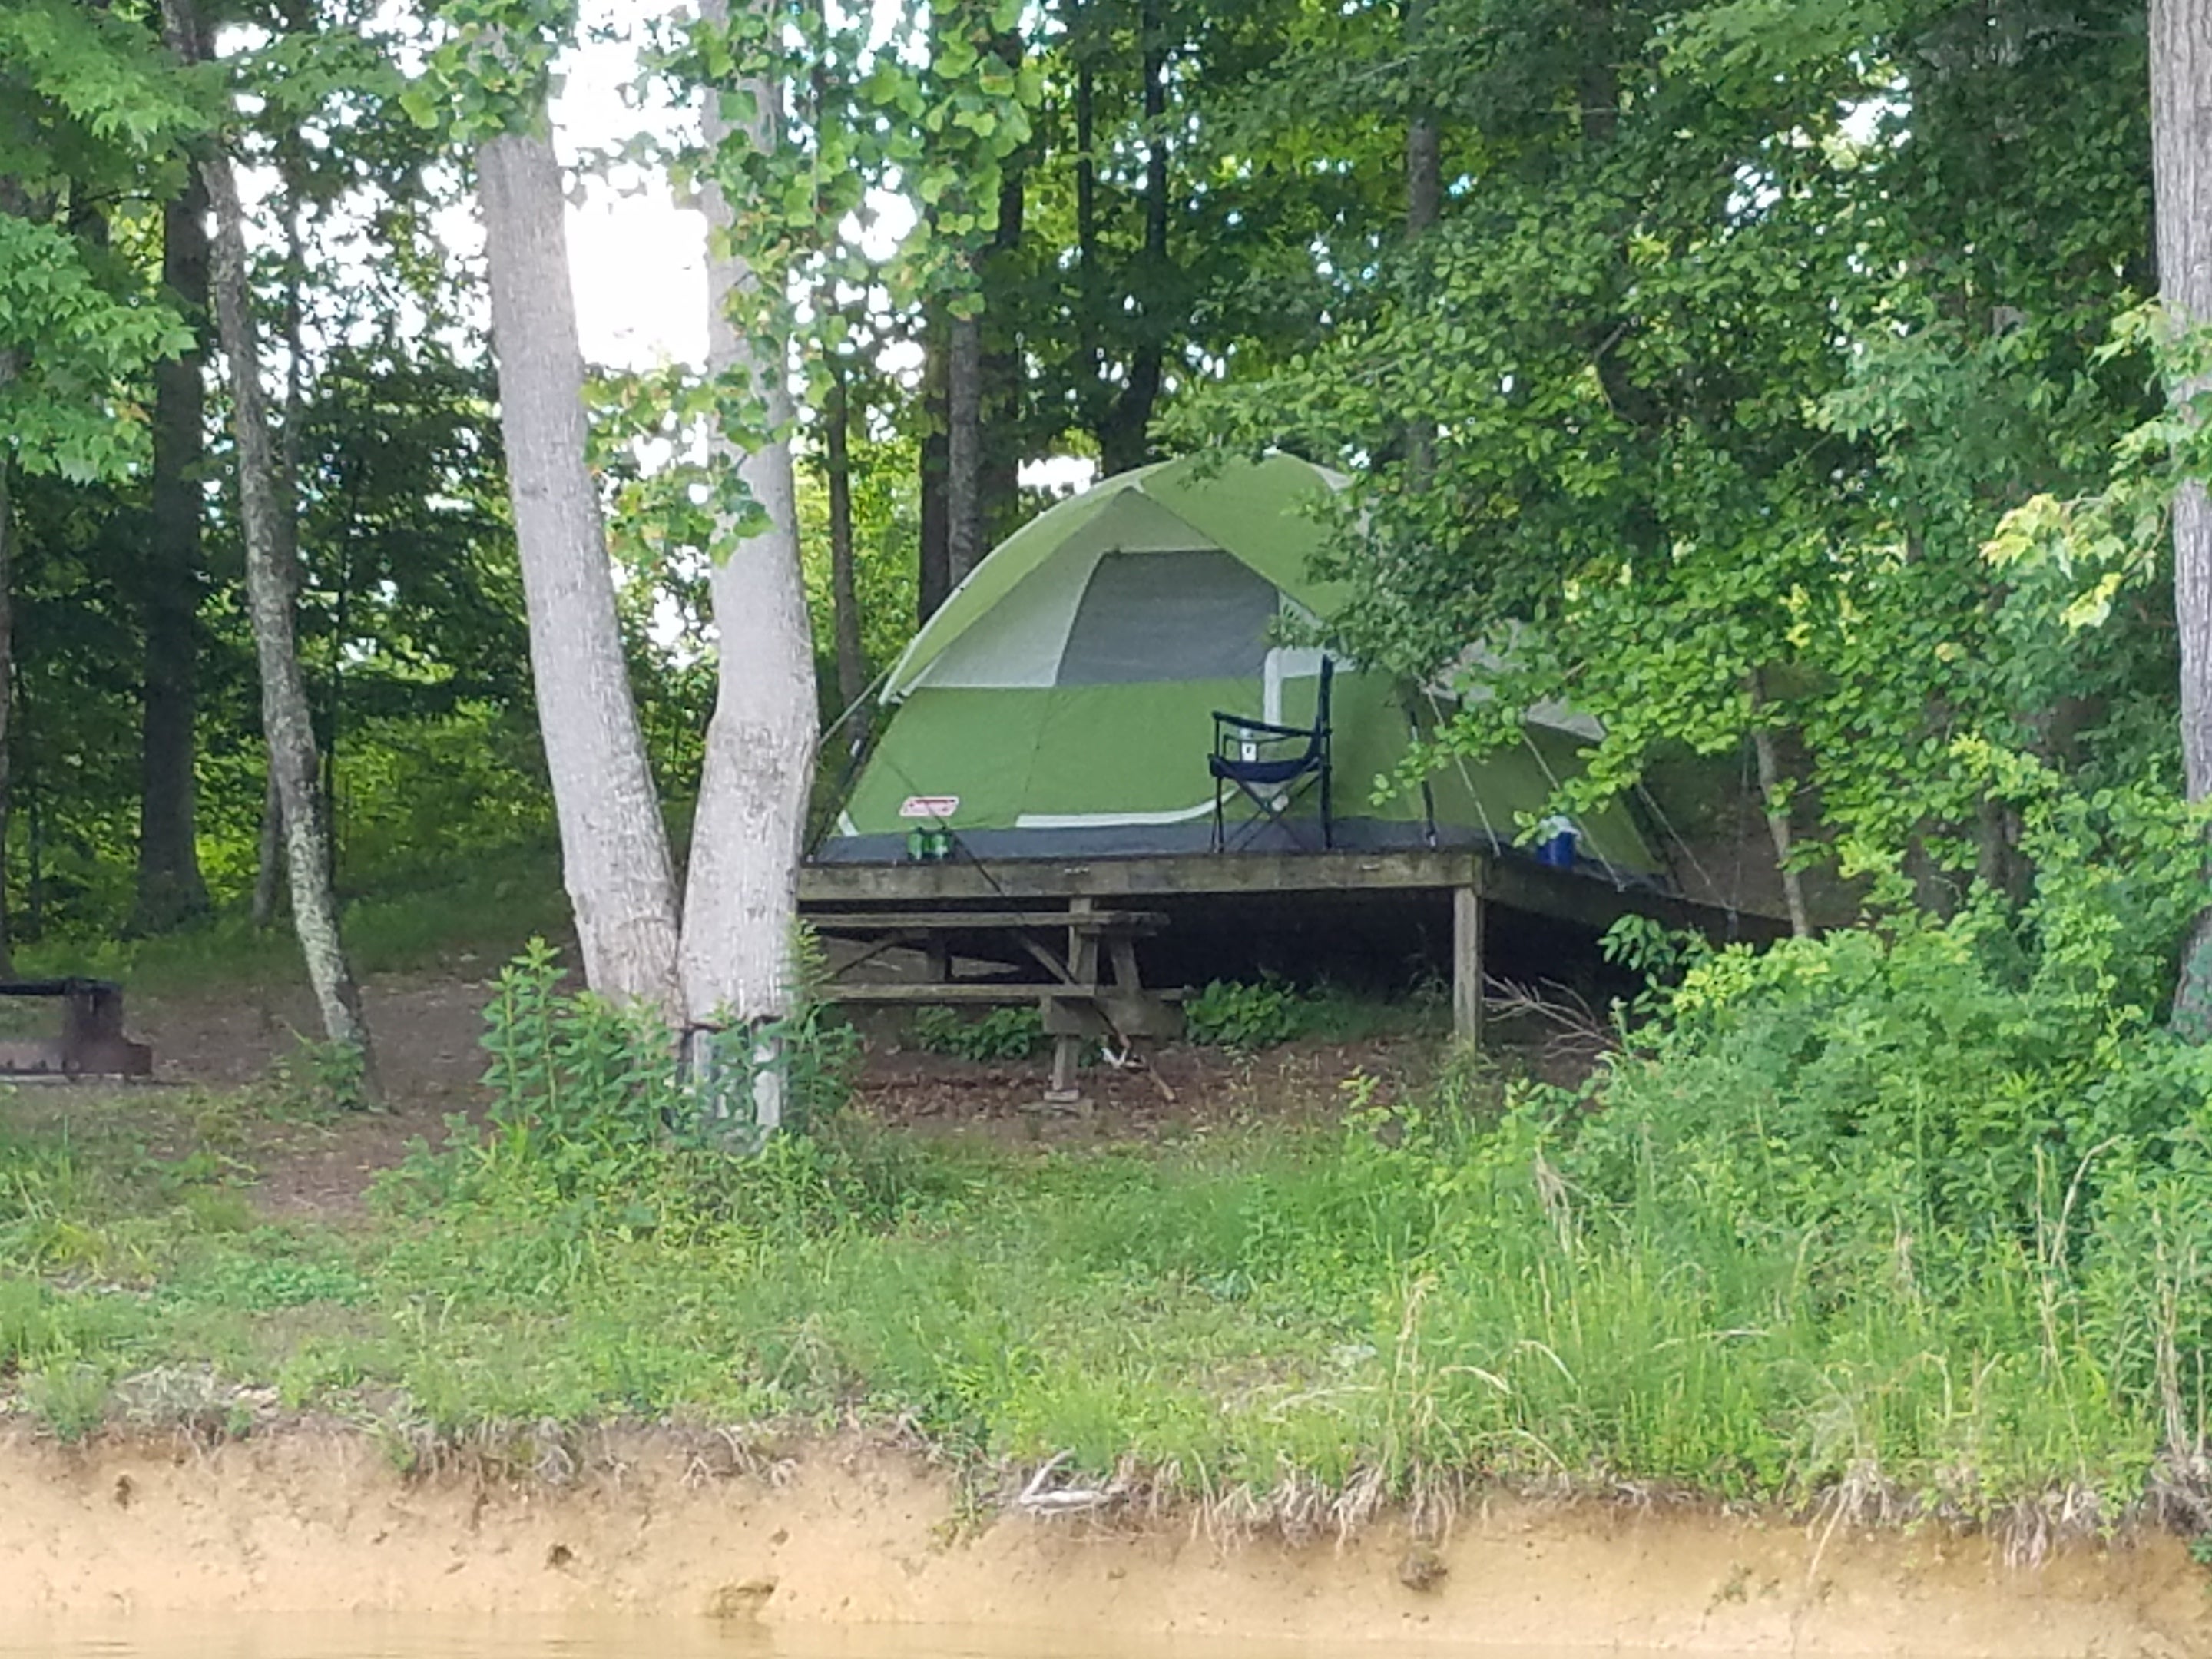 Tent camping on wooden platforms at lake's edge.